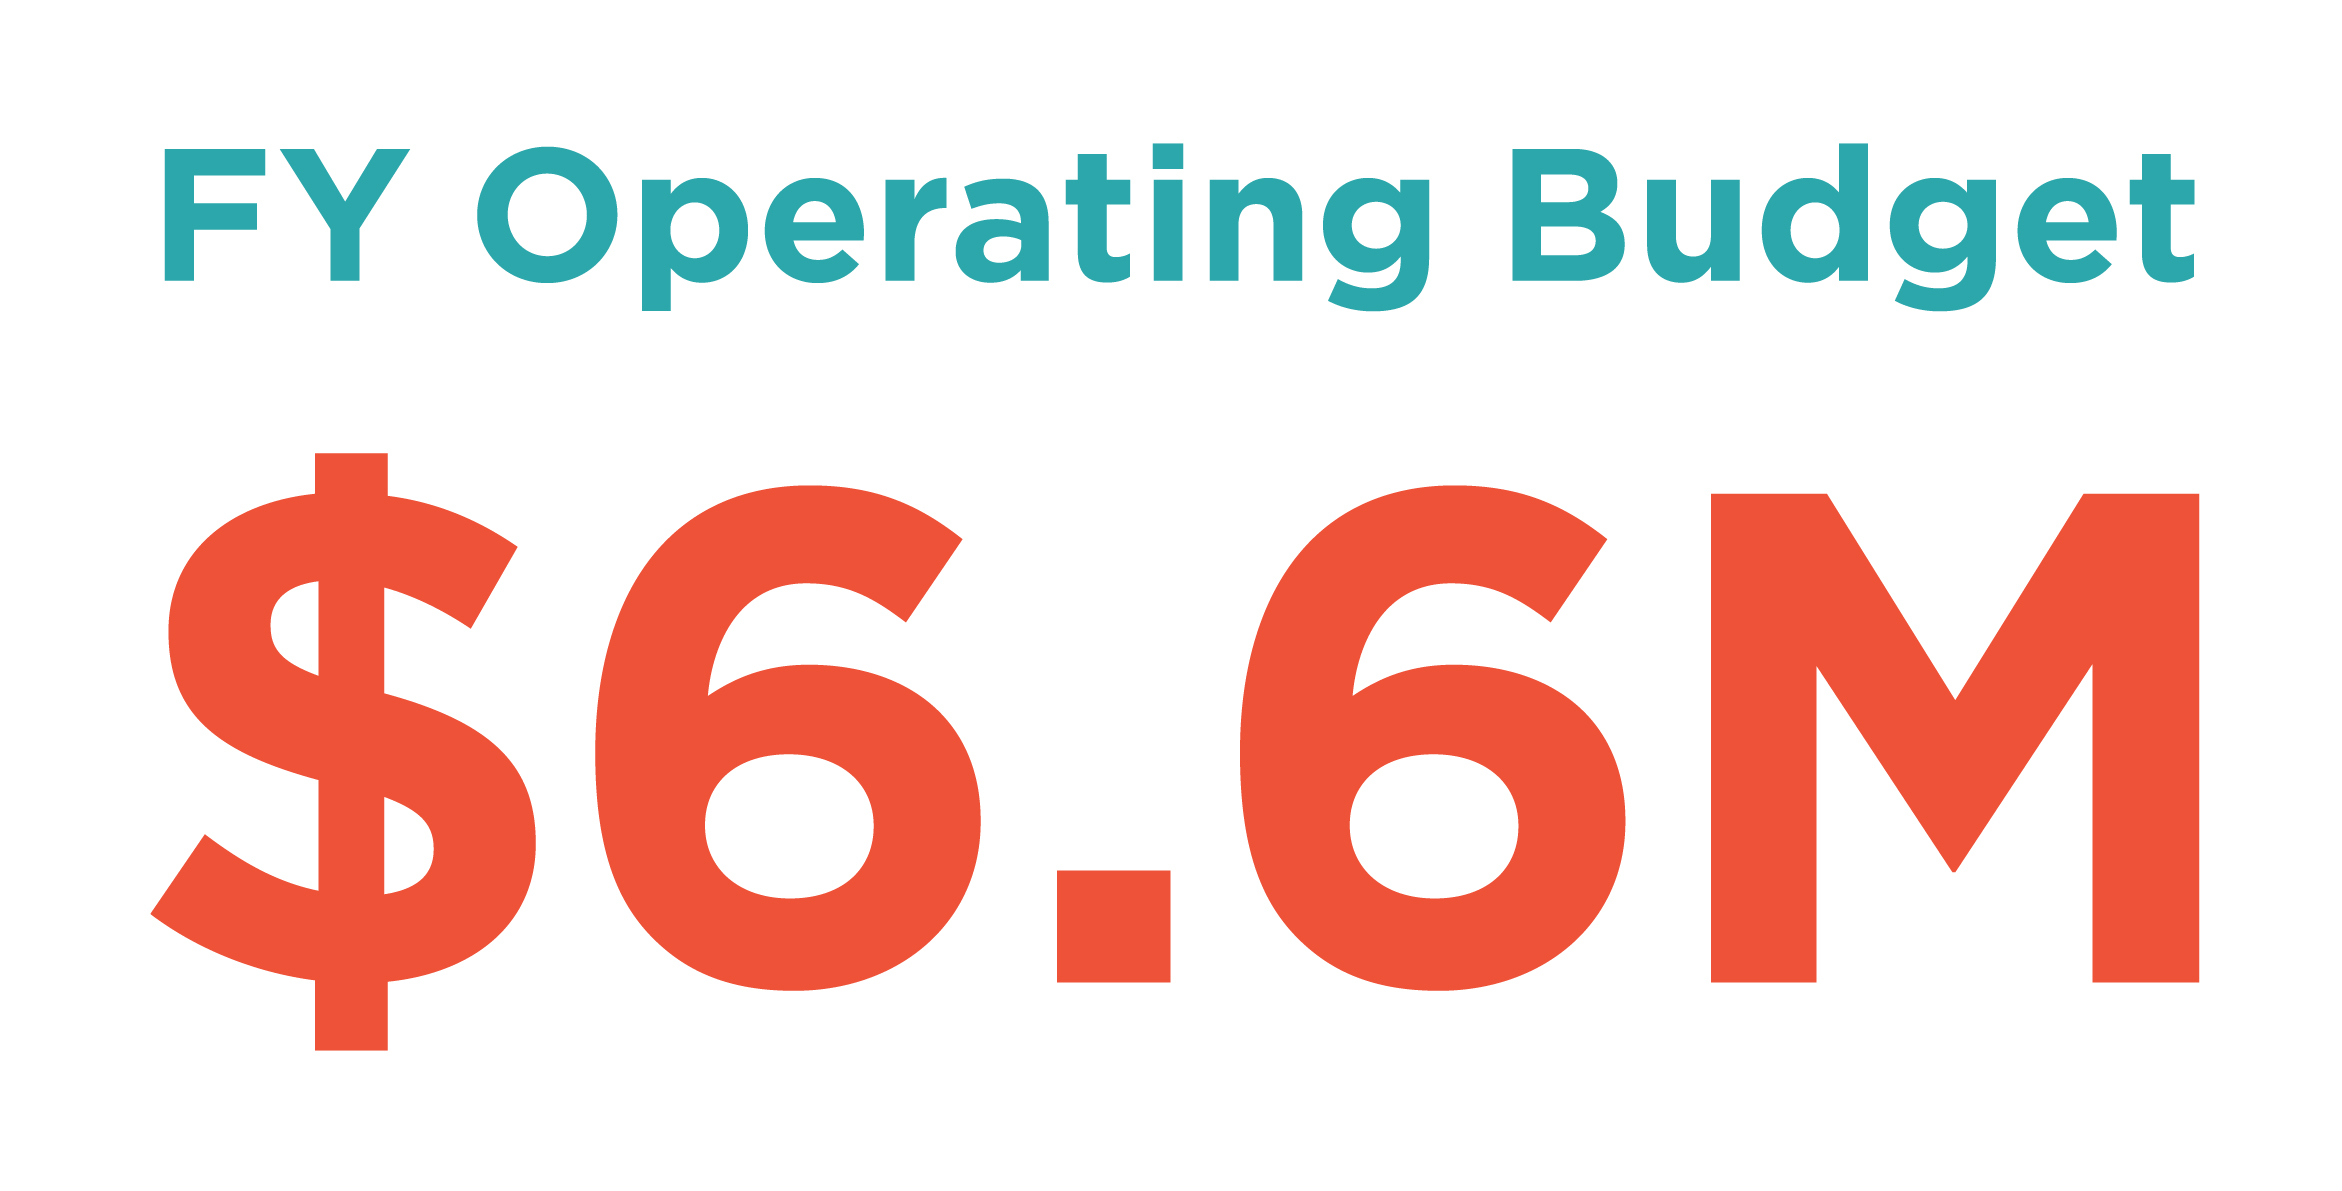 FY Operating Budget: $6.6 Million